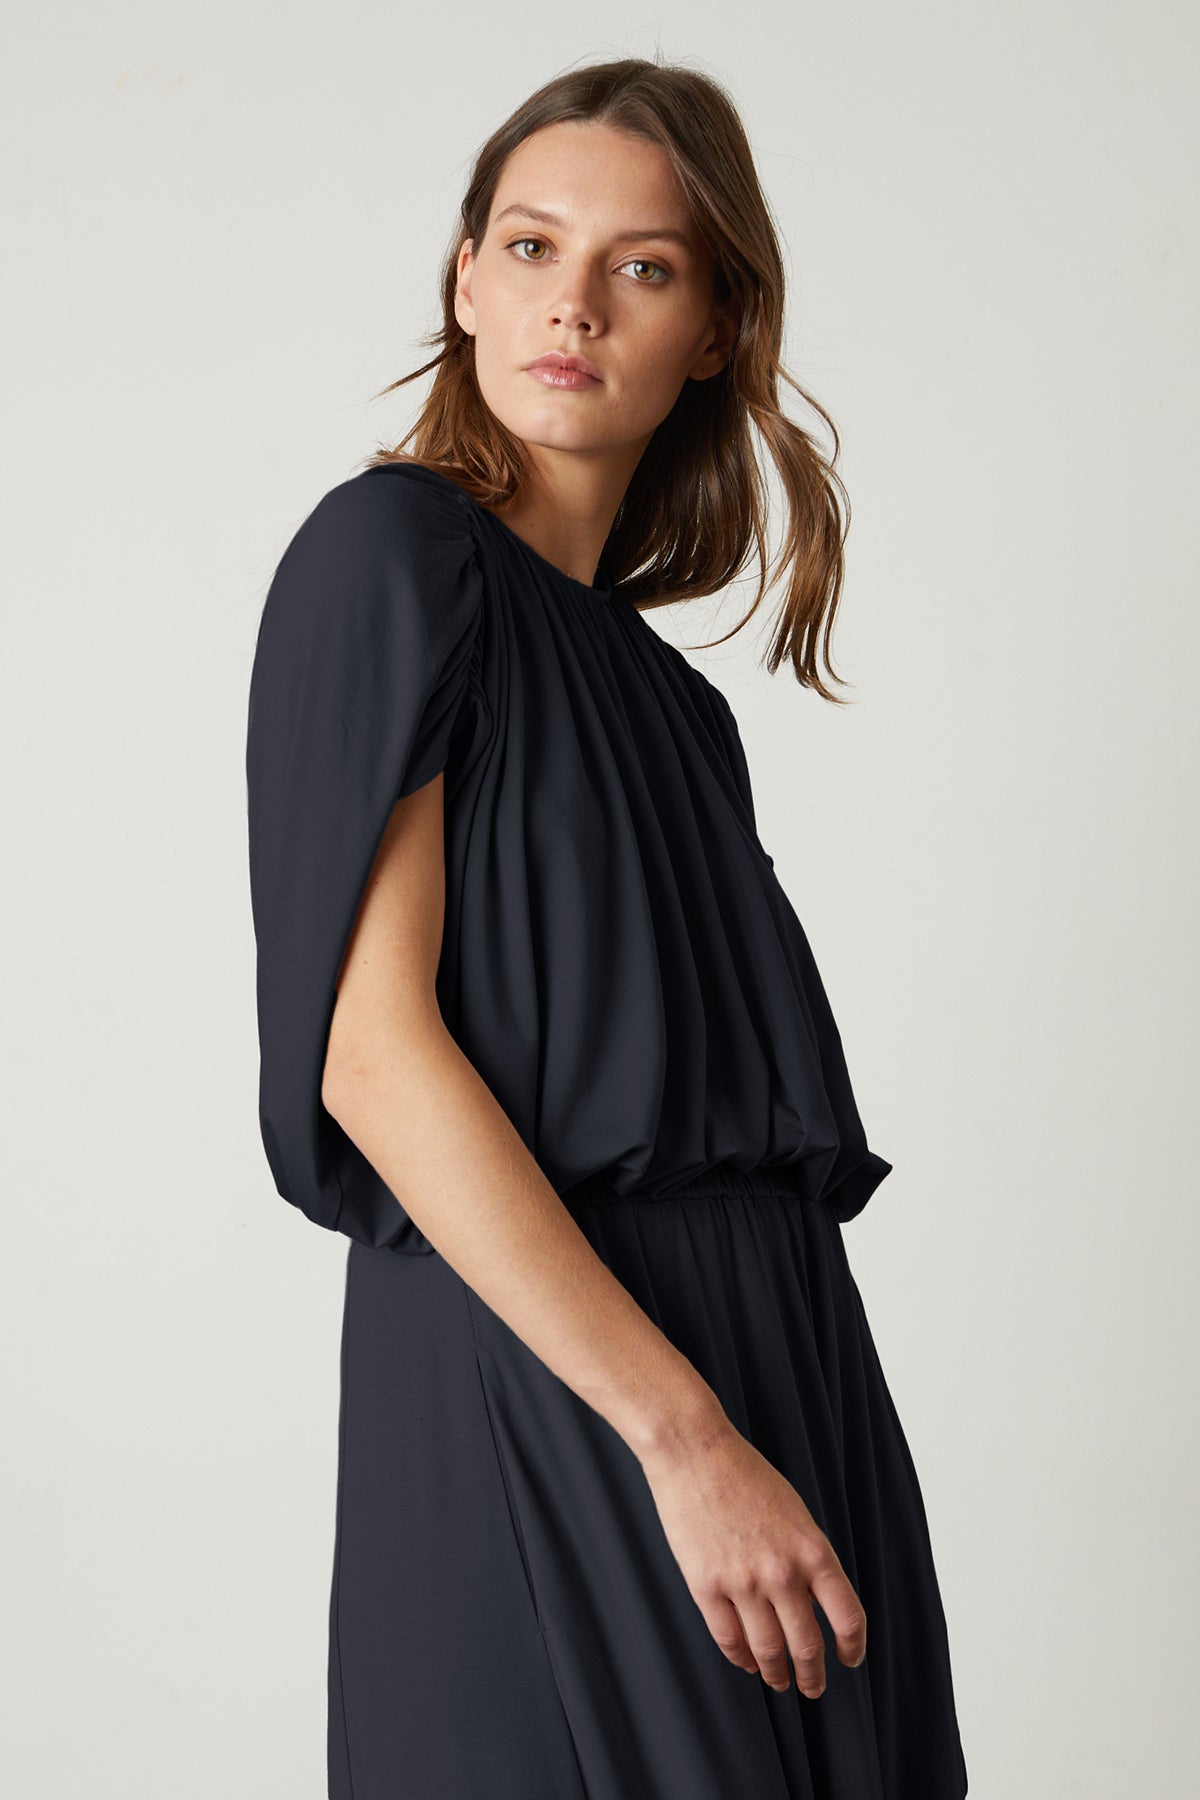 Carmen Cocoon Drape Top in black with Malaya skirt in black side.-25444318707905